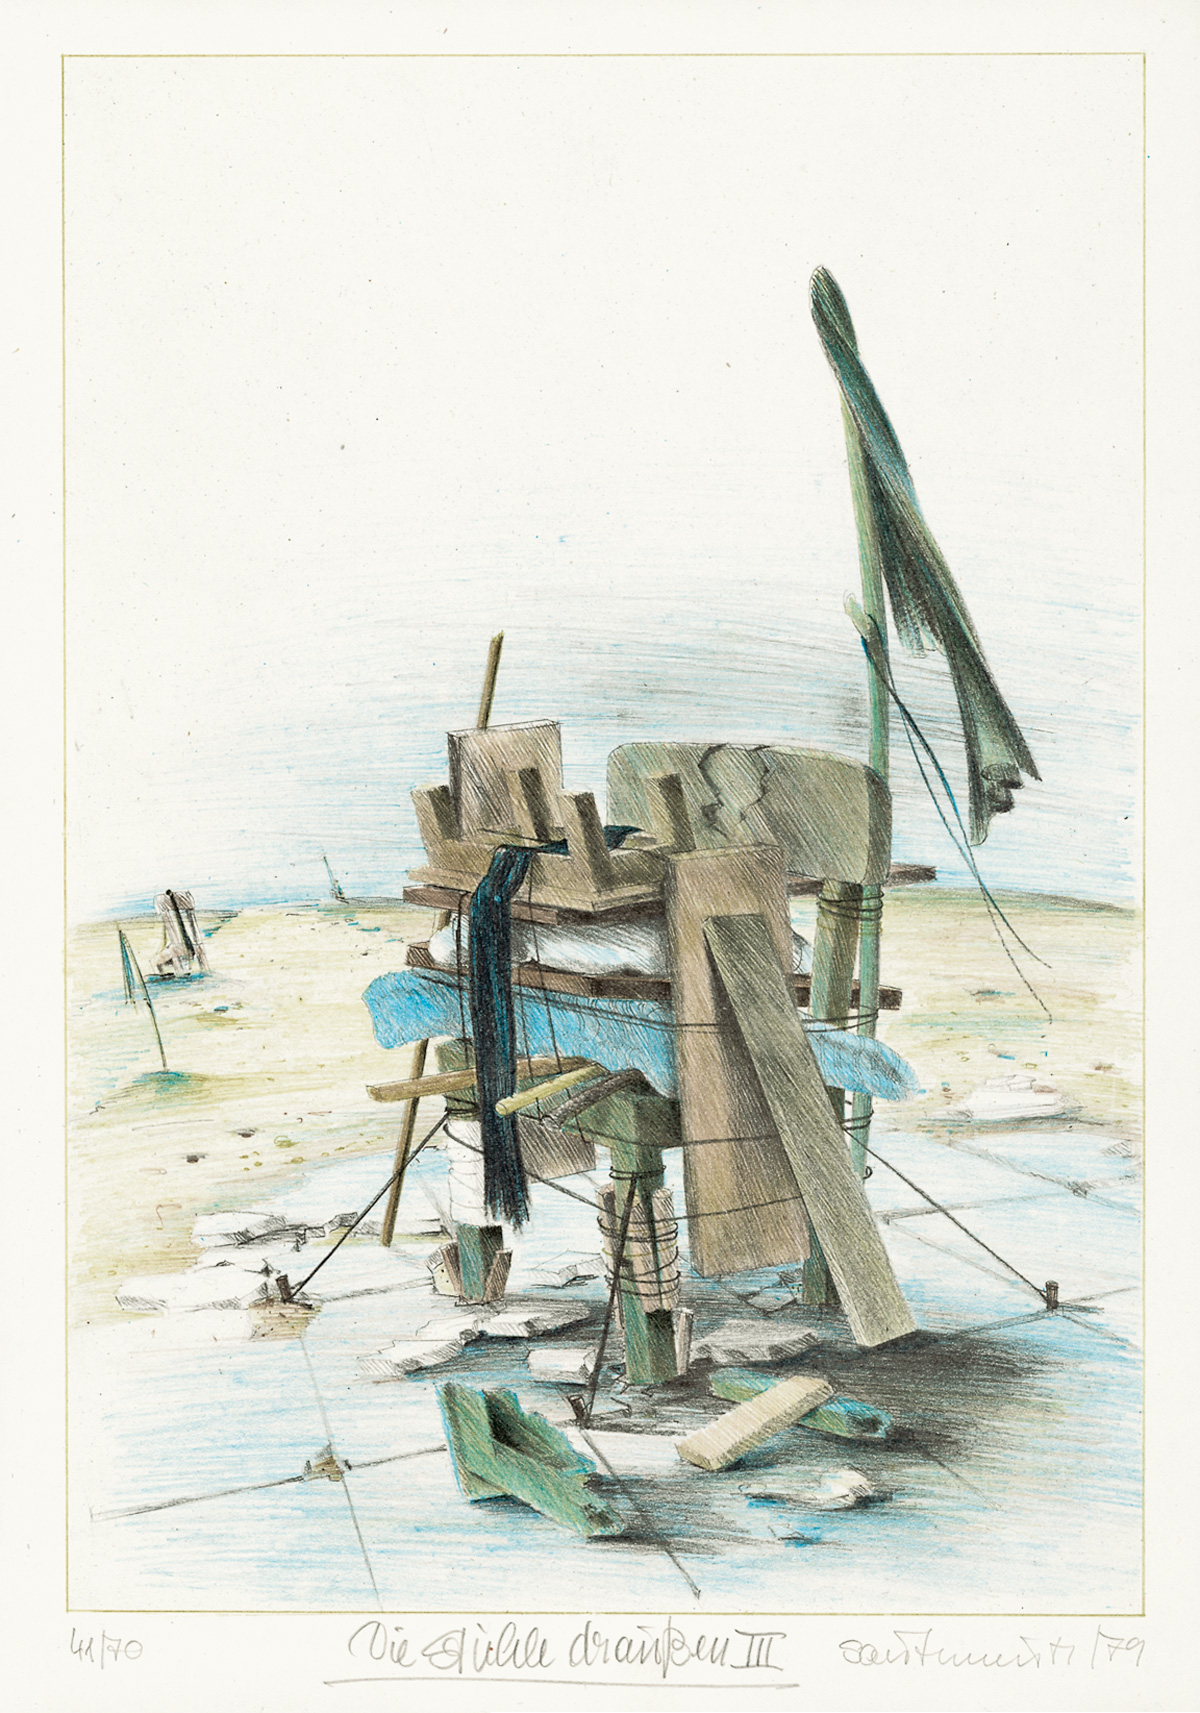 Die Stuehle draussen IV, 1979, Lithographie, 31x25cm